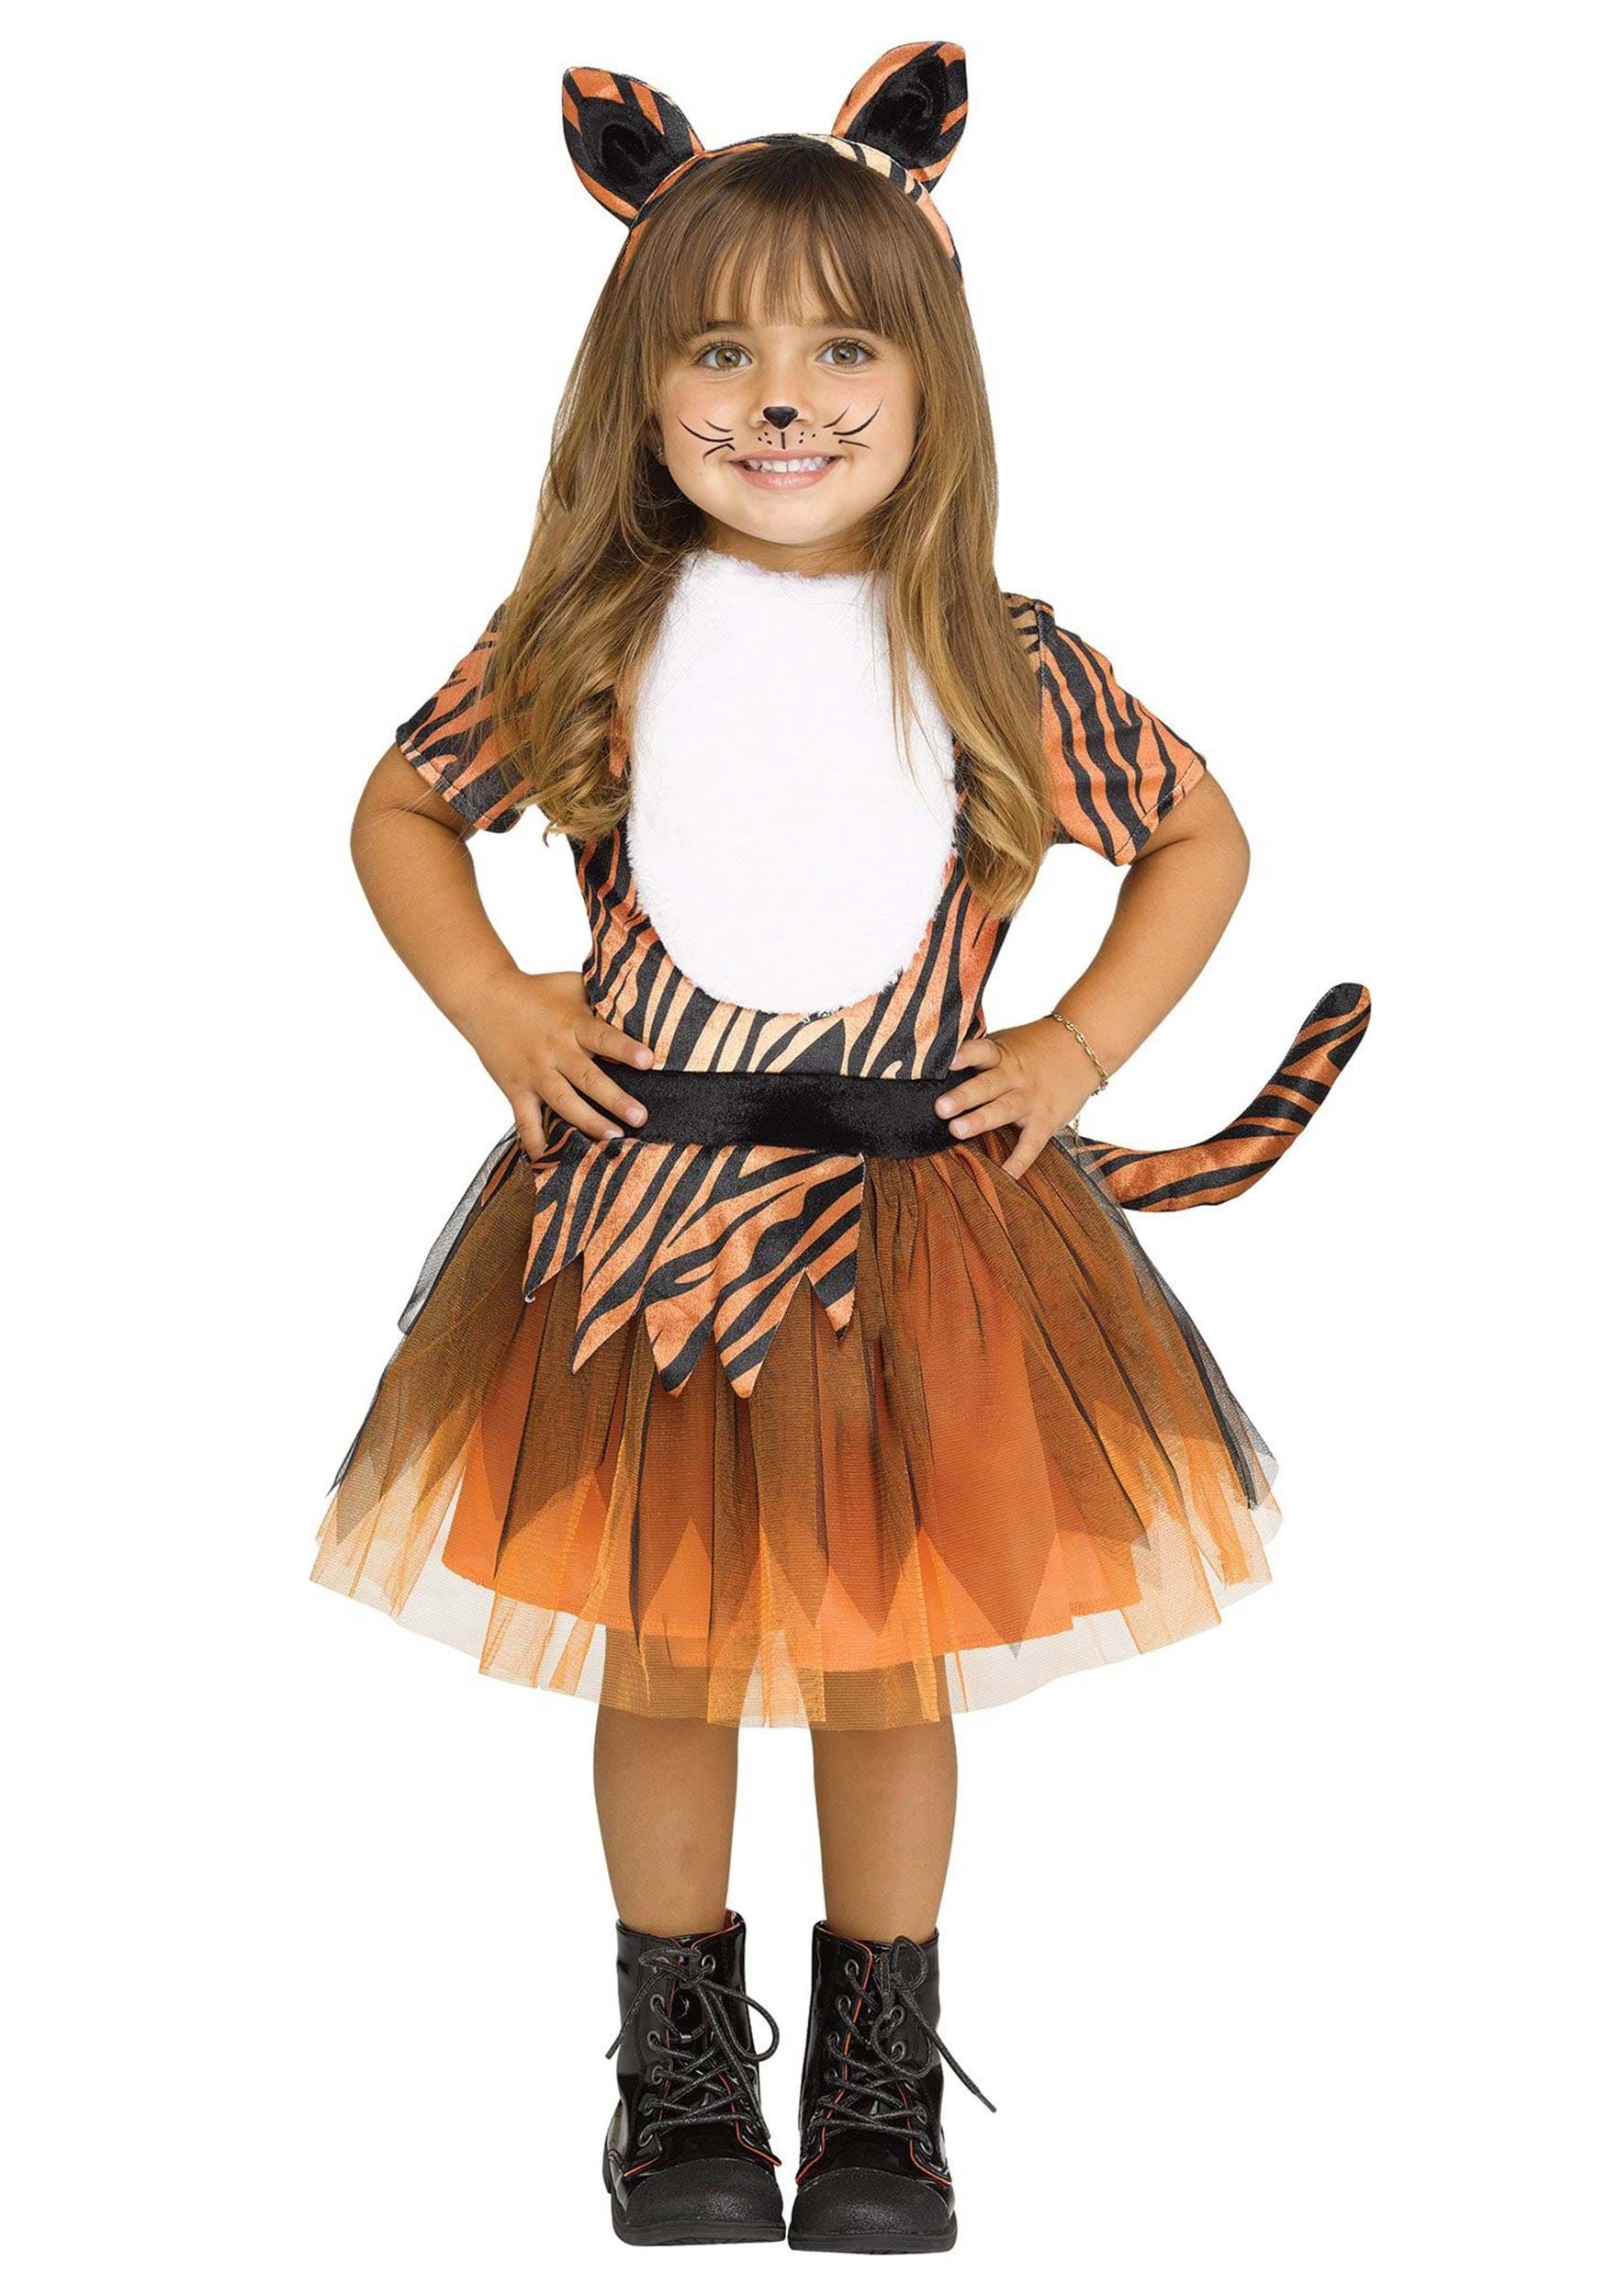 Photos - Fancy Dress Toddler Fun World Girl's Tutu Tiger  Costume Black/Brown/Beige FU11 